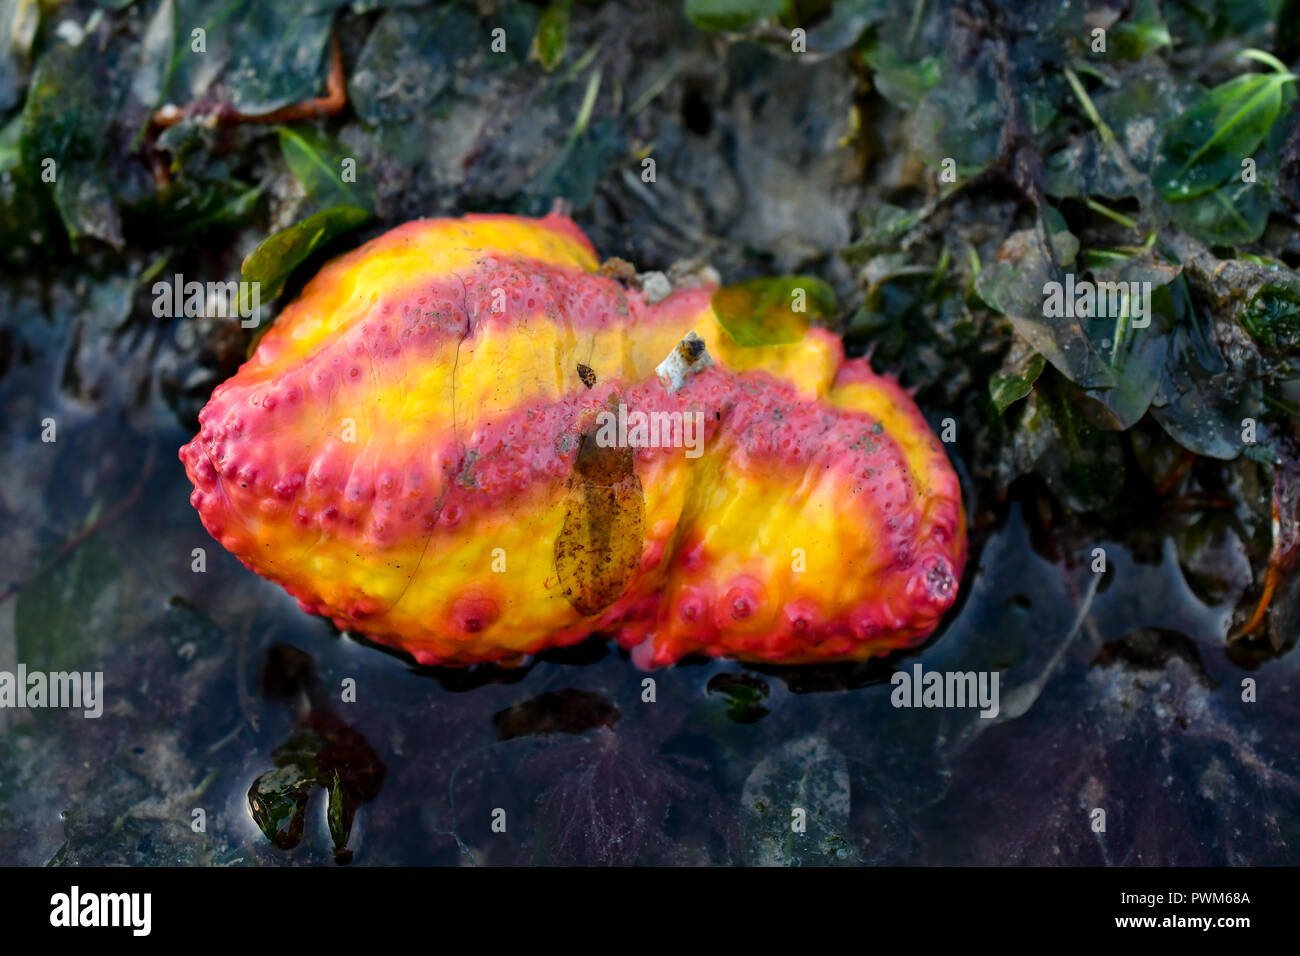 Pink warty sea cucumber Stock Photo